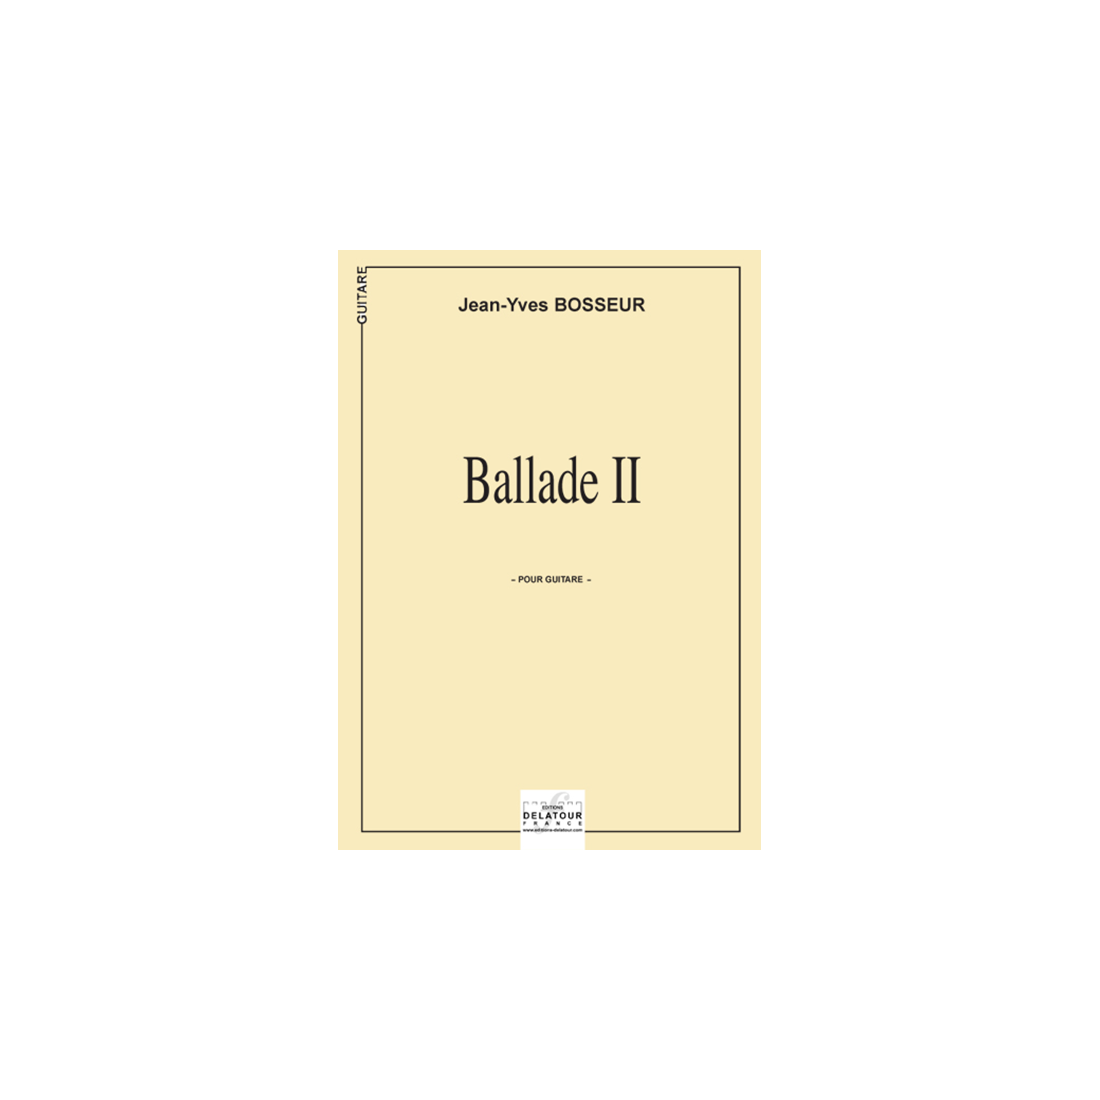 Ballade II for guitar